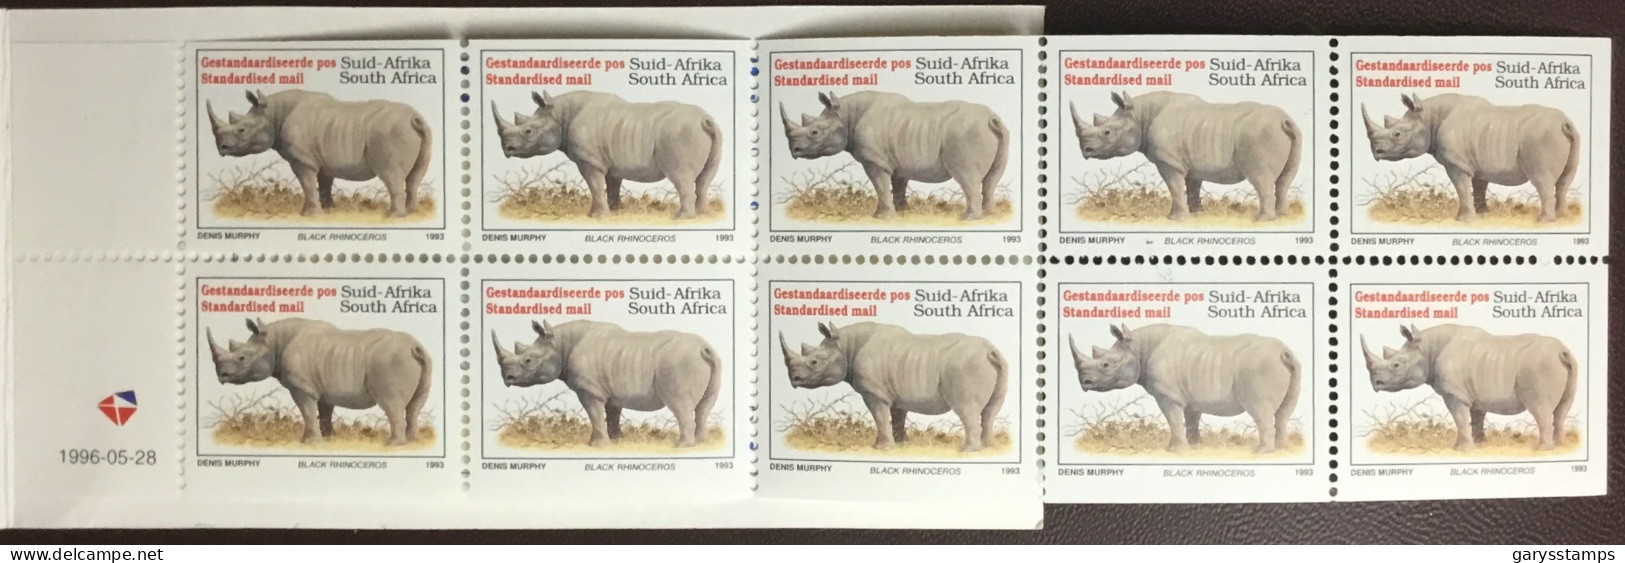 South Africa 1995 Standardised Mail Rhino Animals Booklet Unused - Rhinozerosse